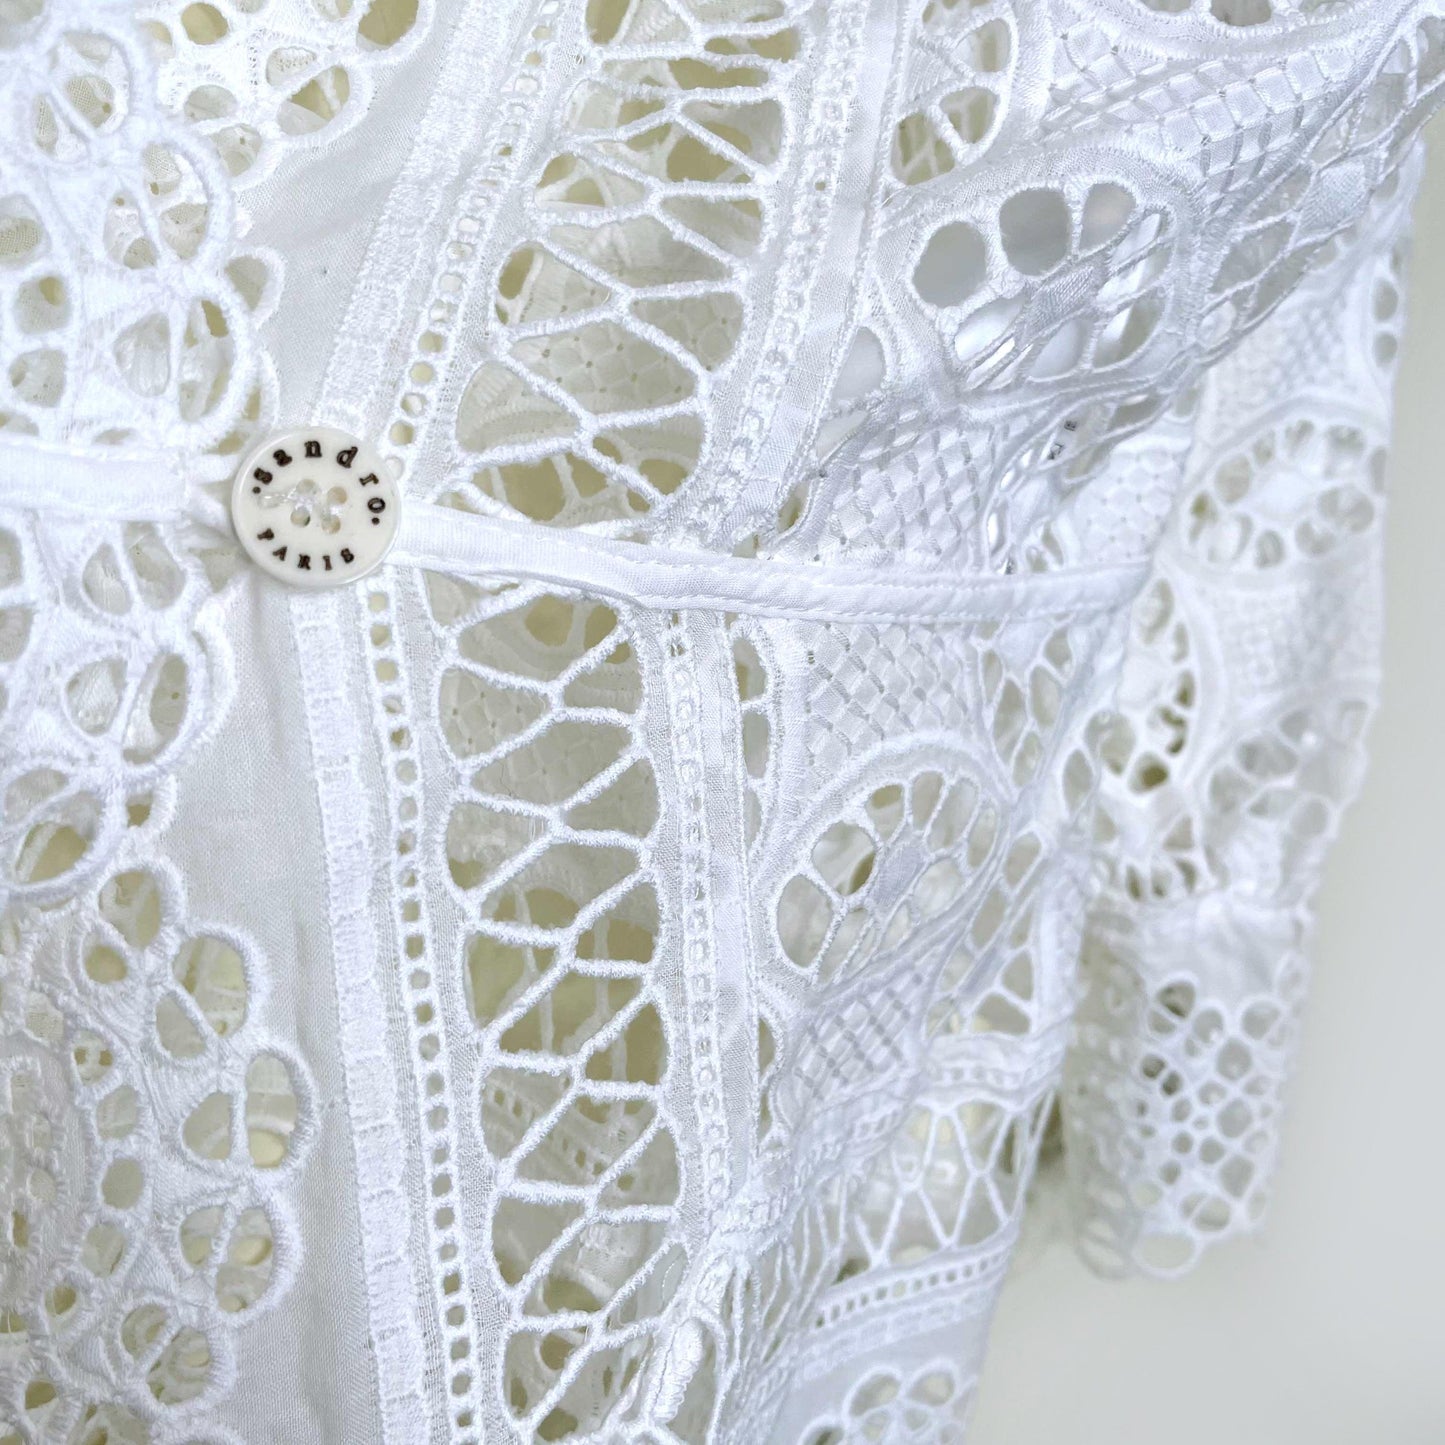 nwt sandro crochet lace single button wrap blouse - size 3 (large